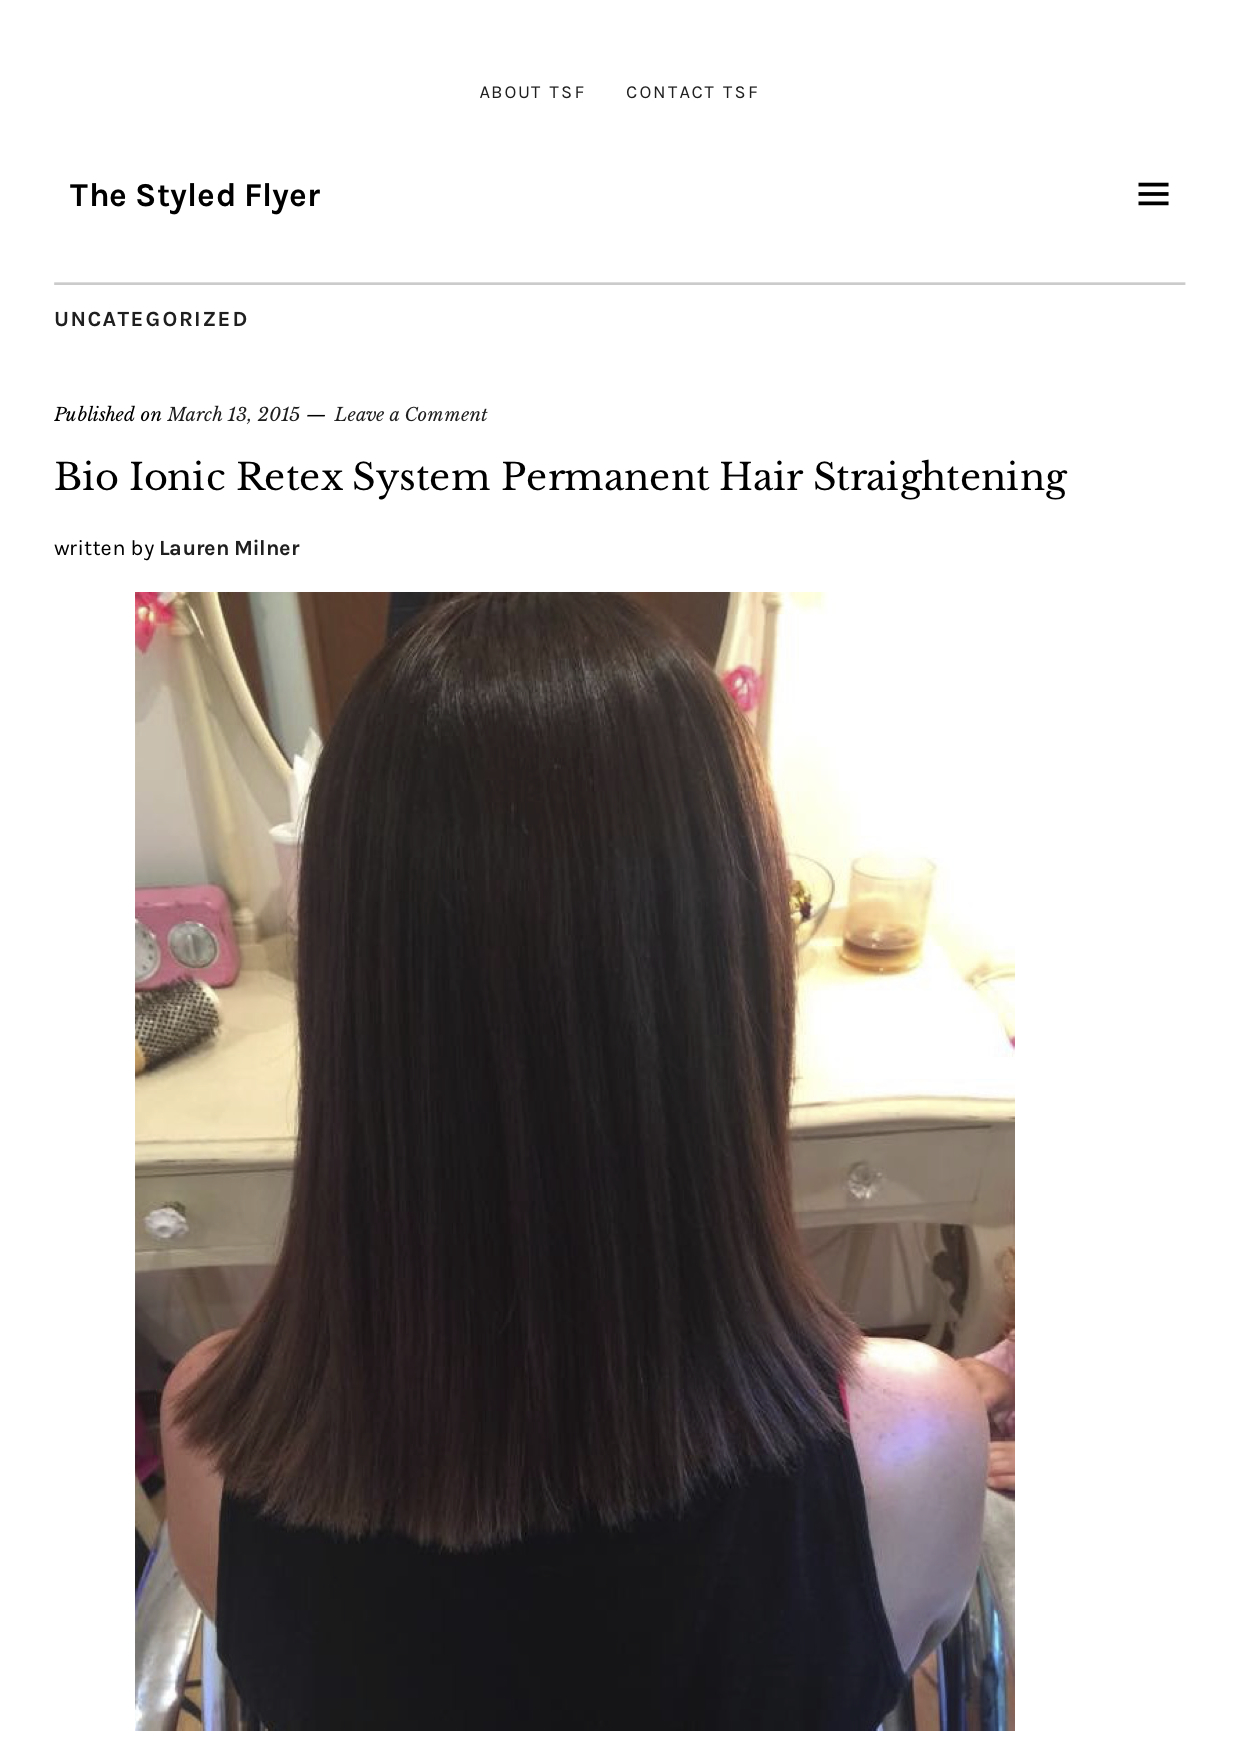 Bio Ionic Retex System Permanent Hair Straightening | The Styled Flyer